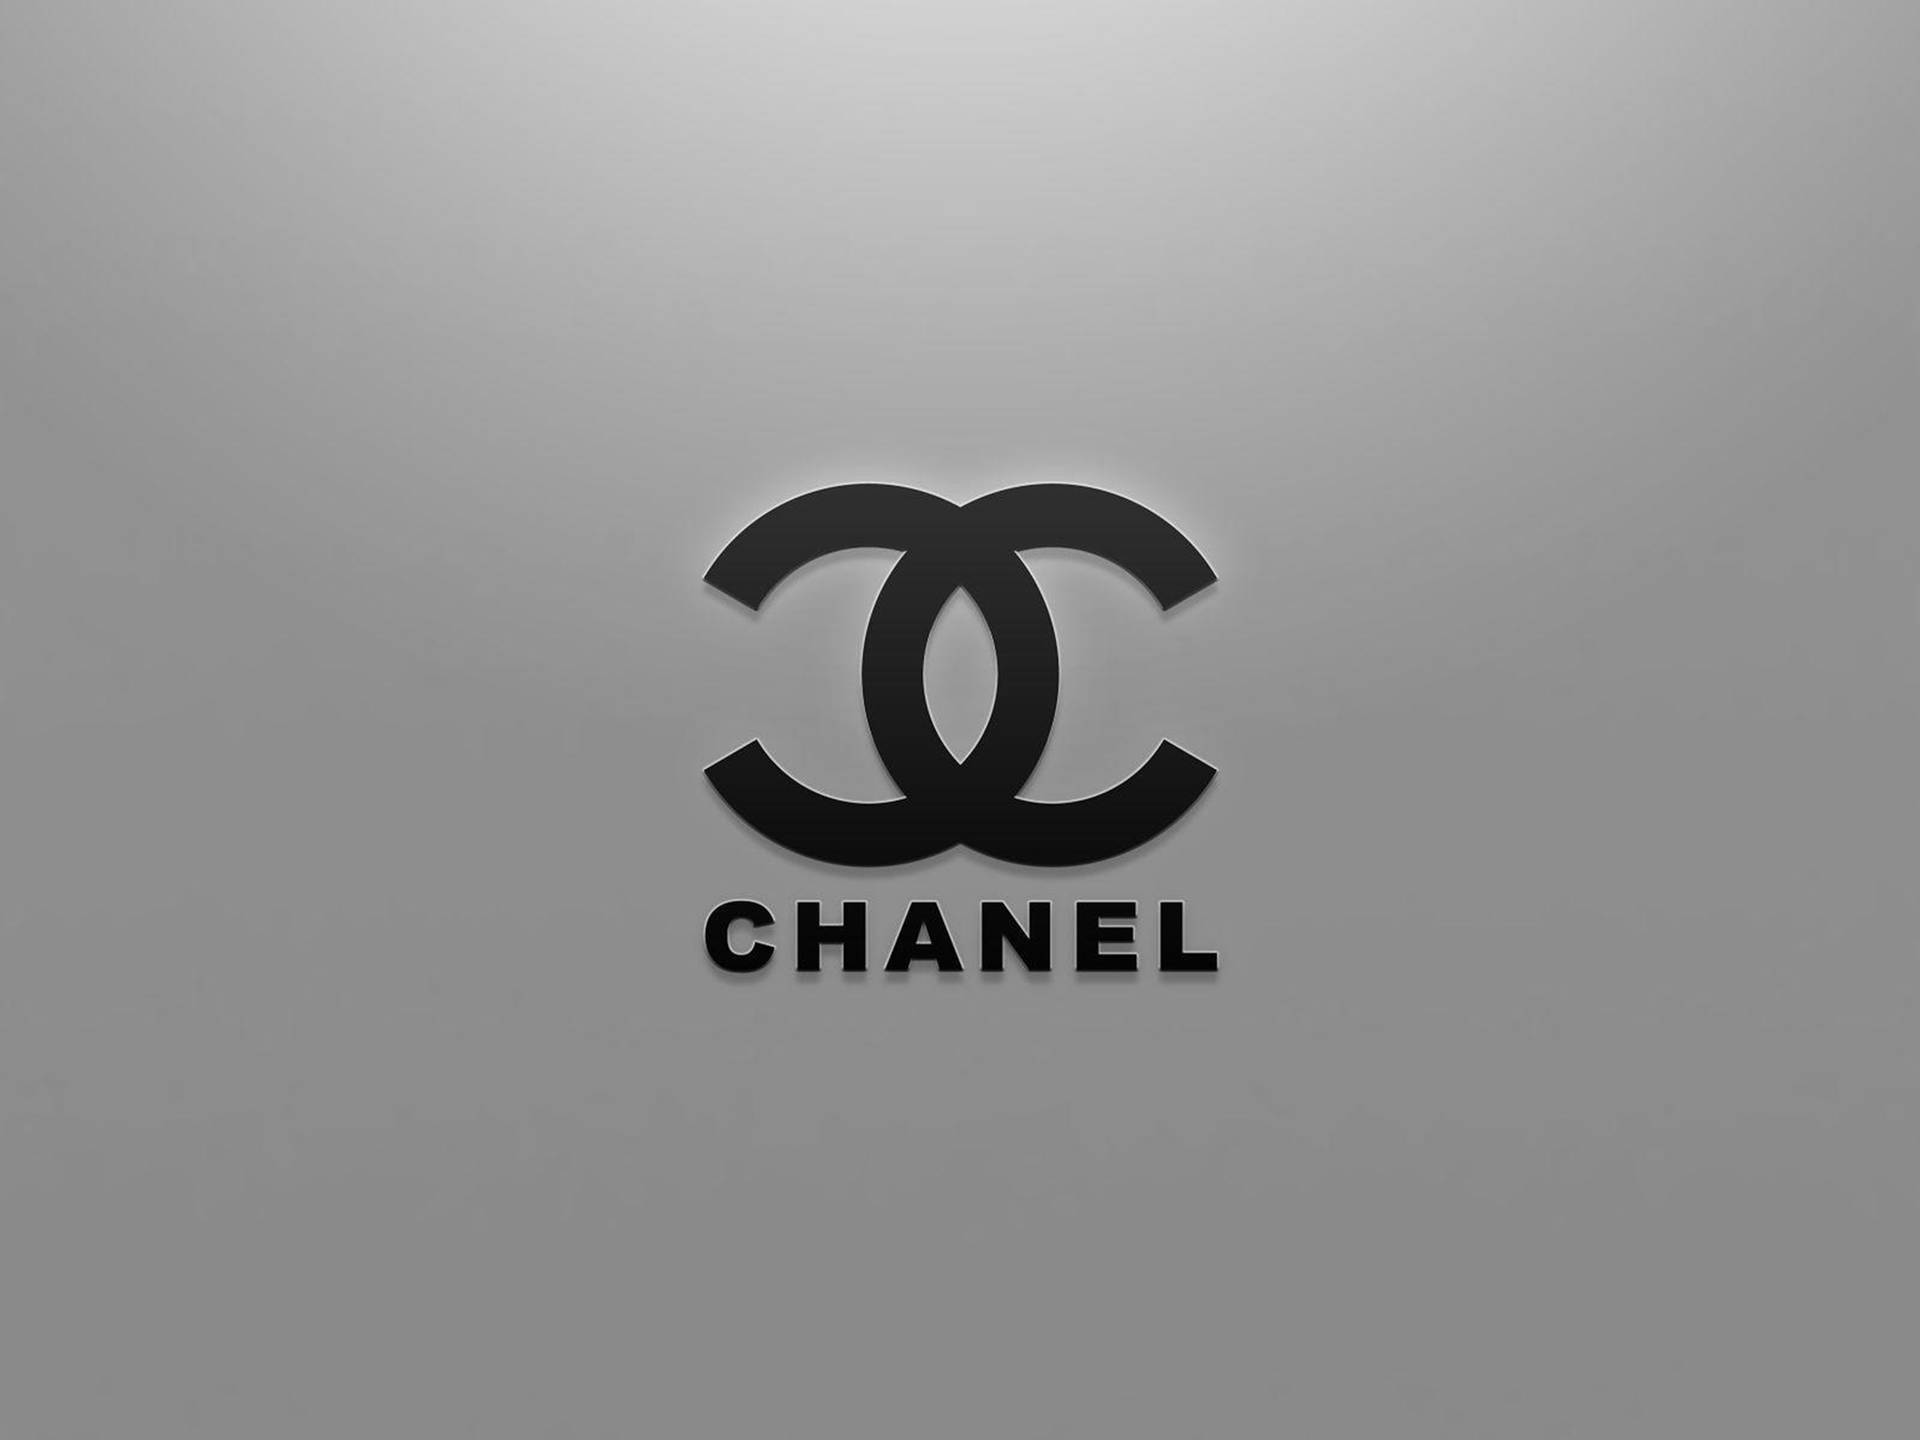 Free Chanel Logo Wallpaper Downloads, [100+] Chanel Logo Wallpapers for  FREE 